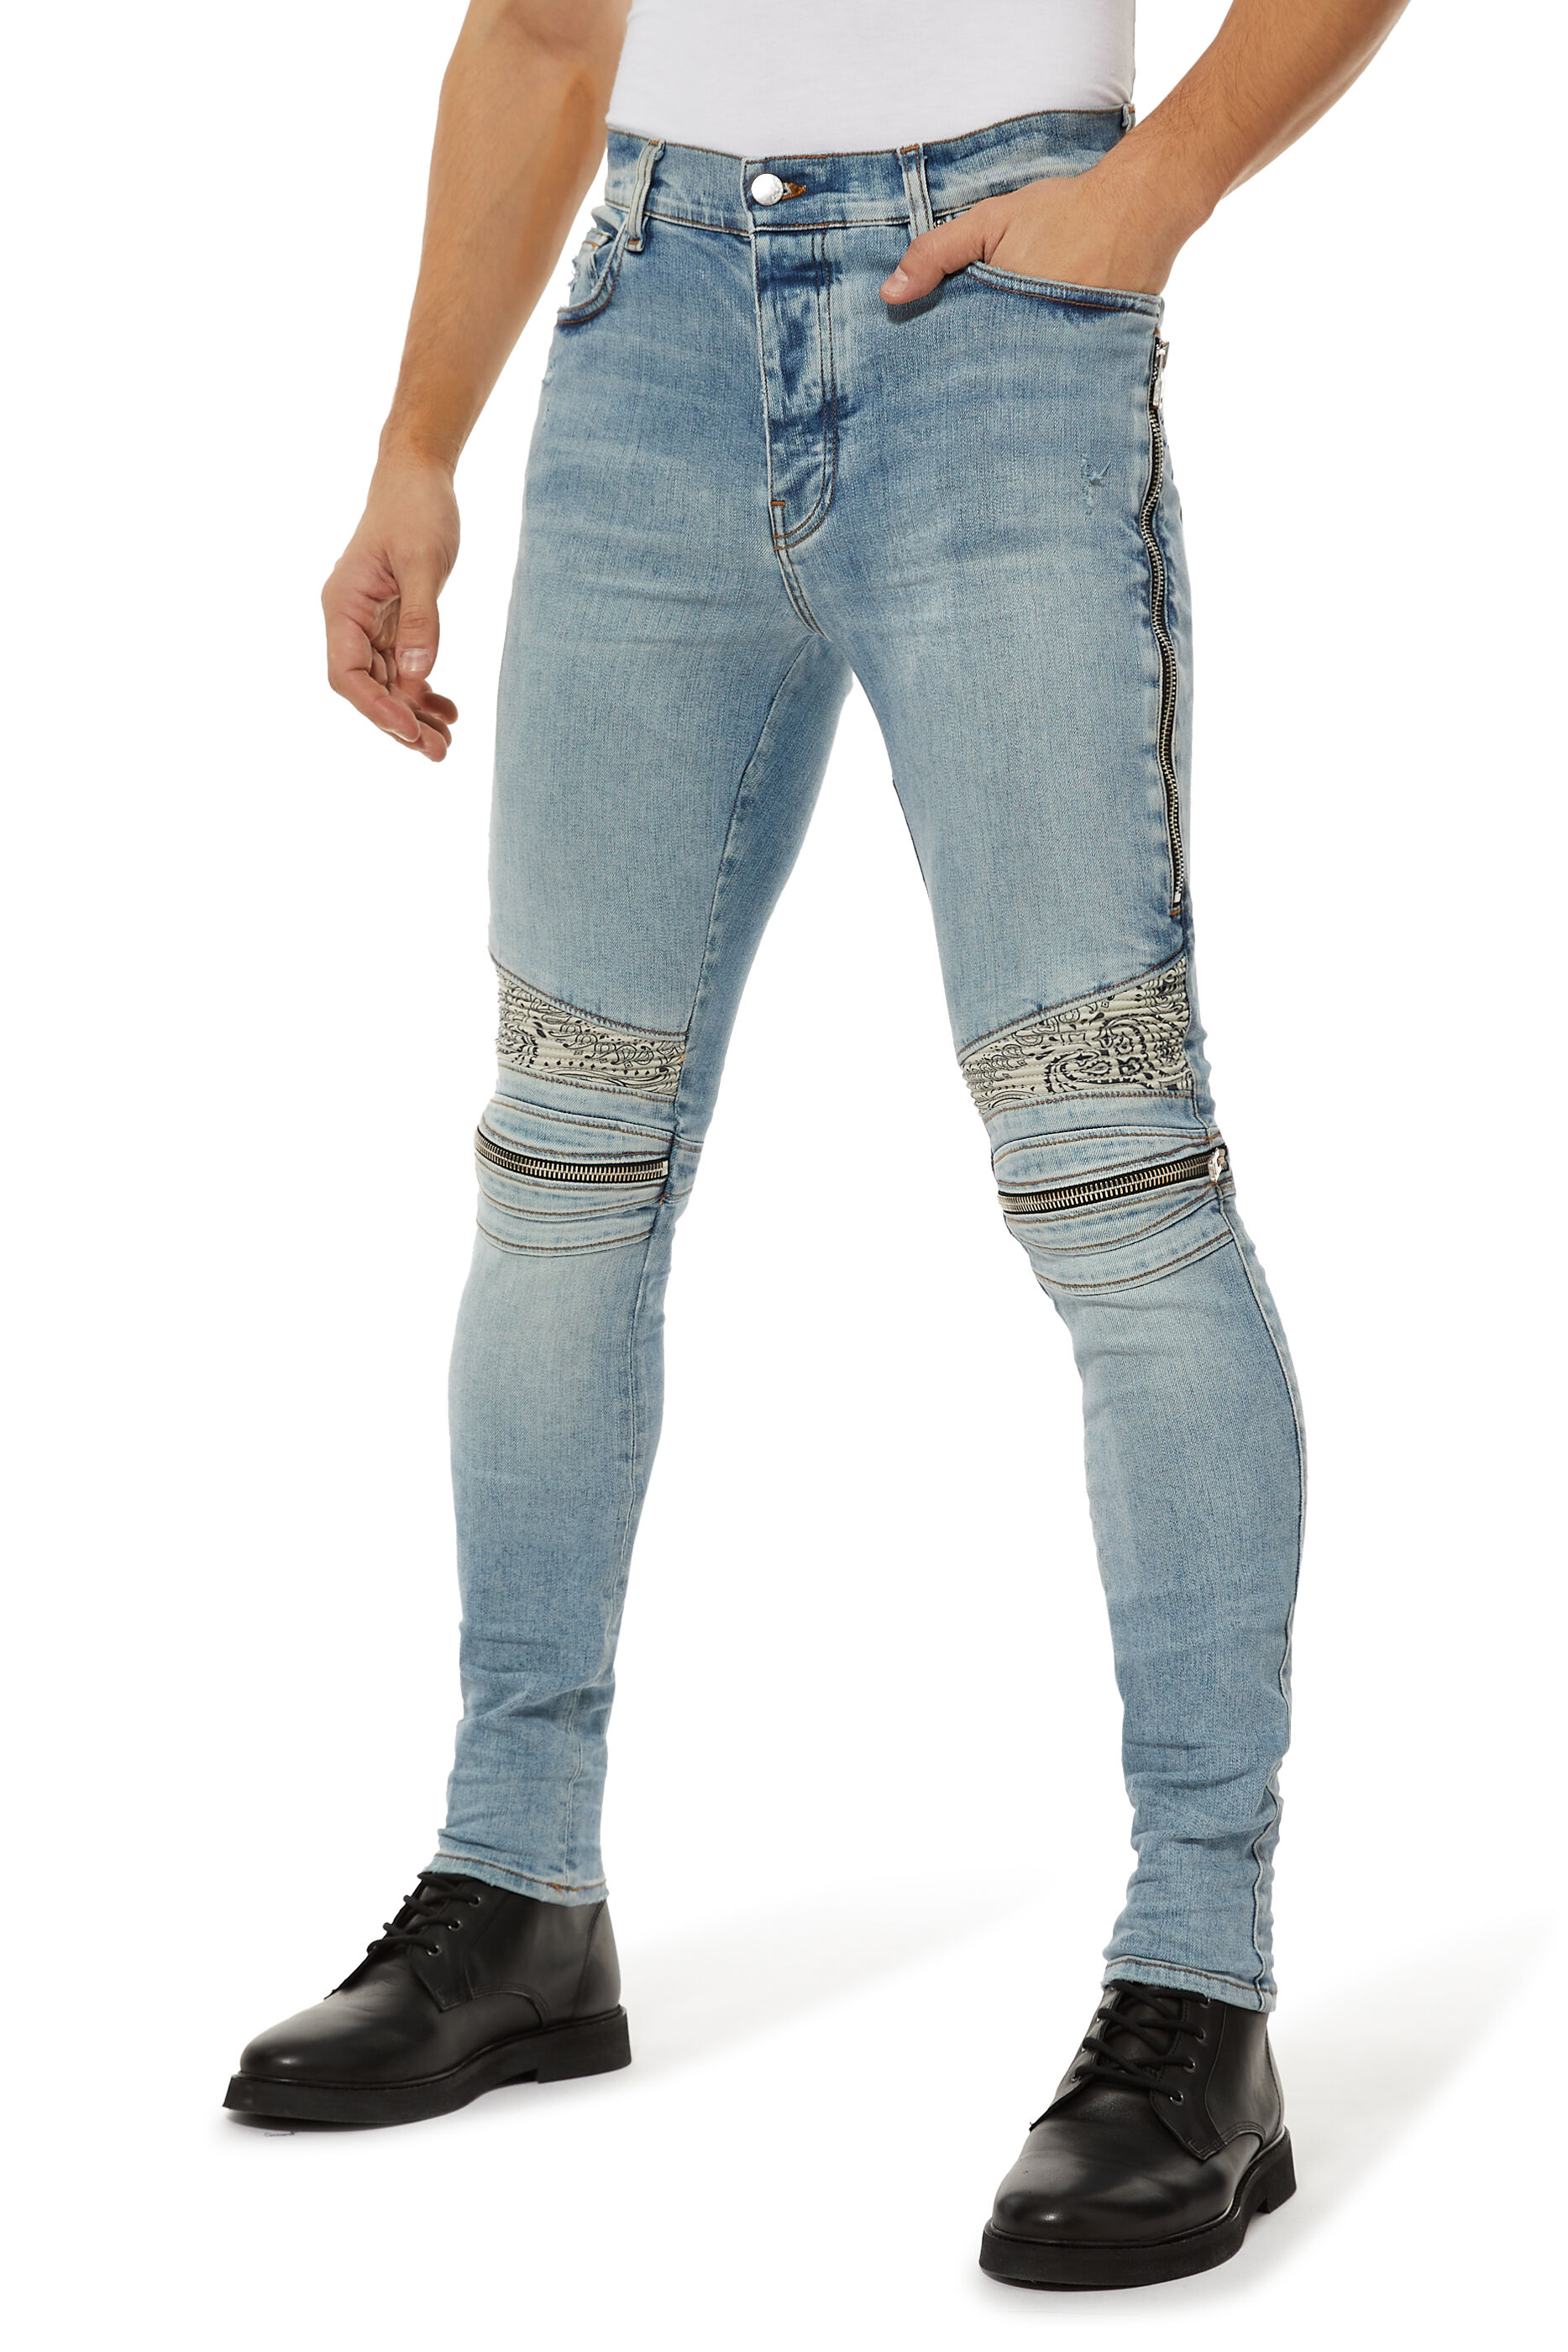 amiri jeans bloomingdales